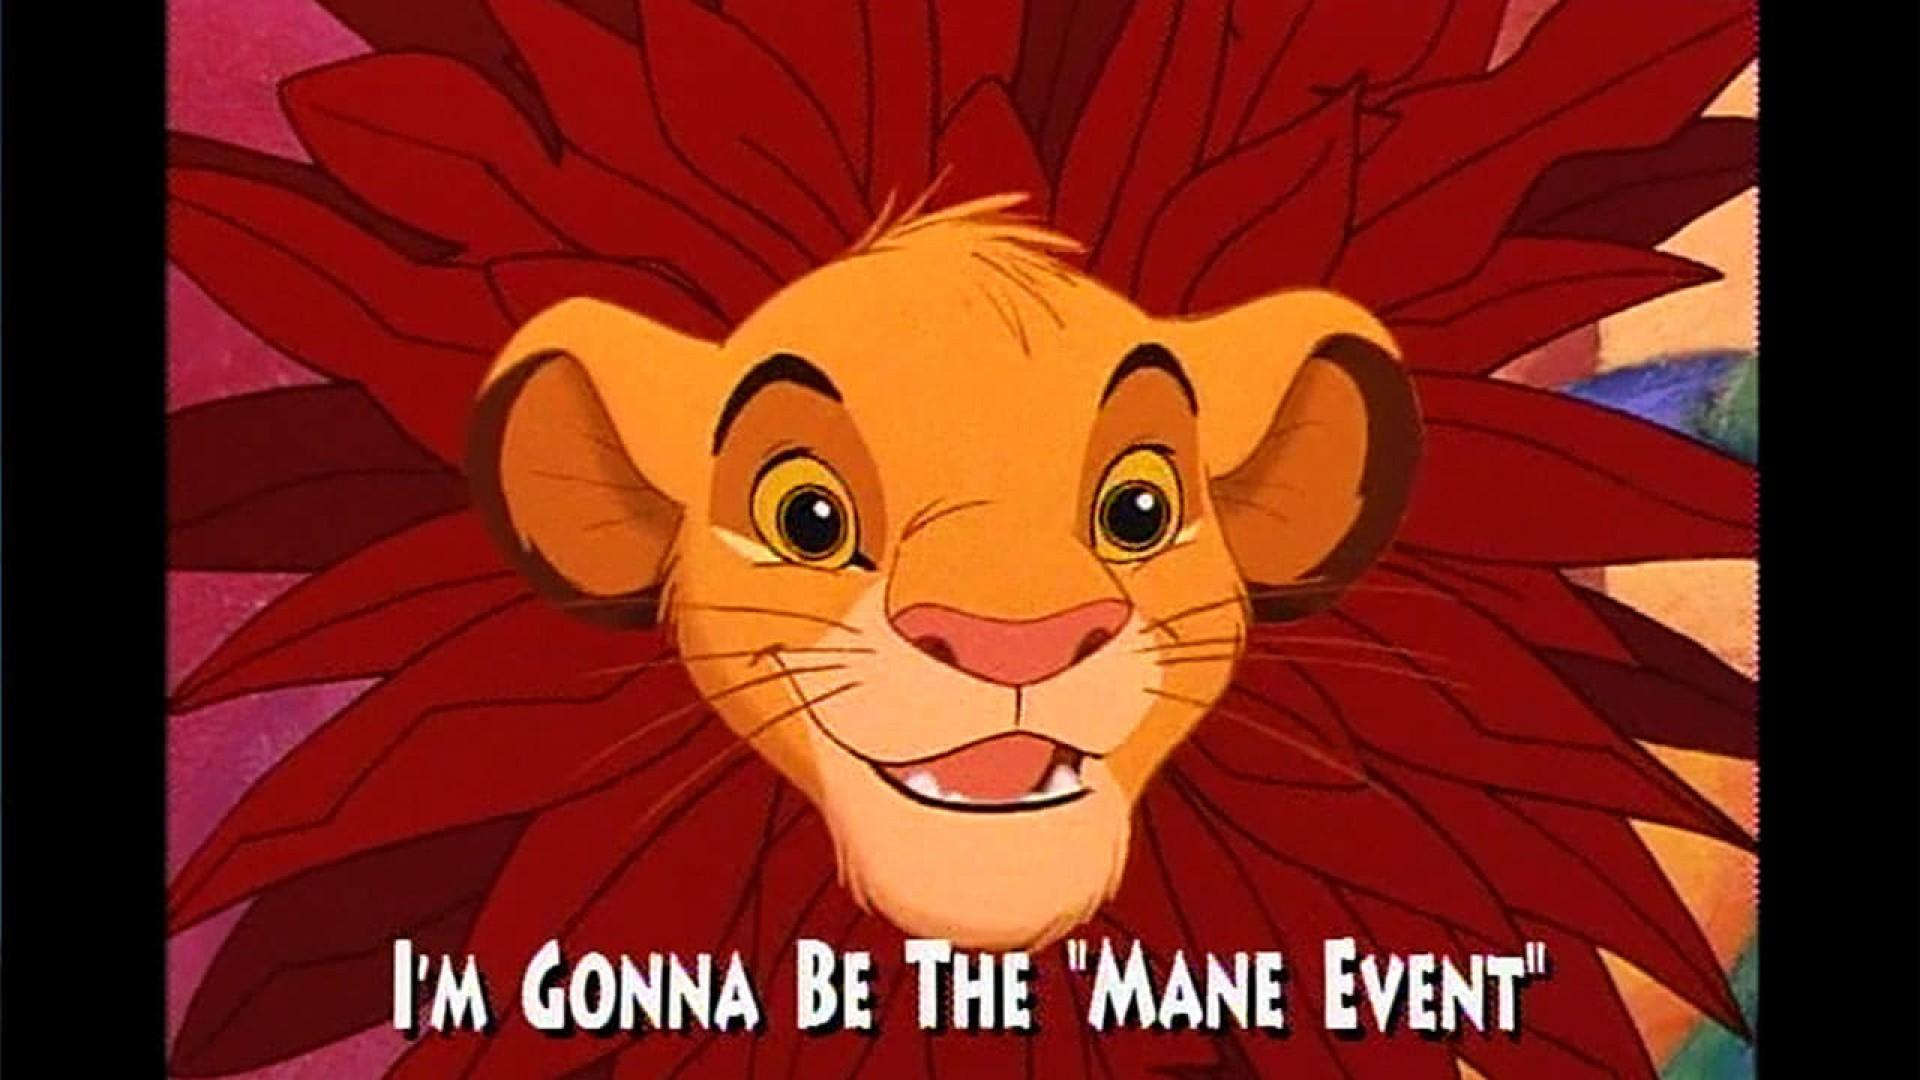 Disney Sing-Along-Songs: The Lion King - Circle of Life